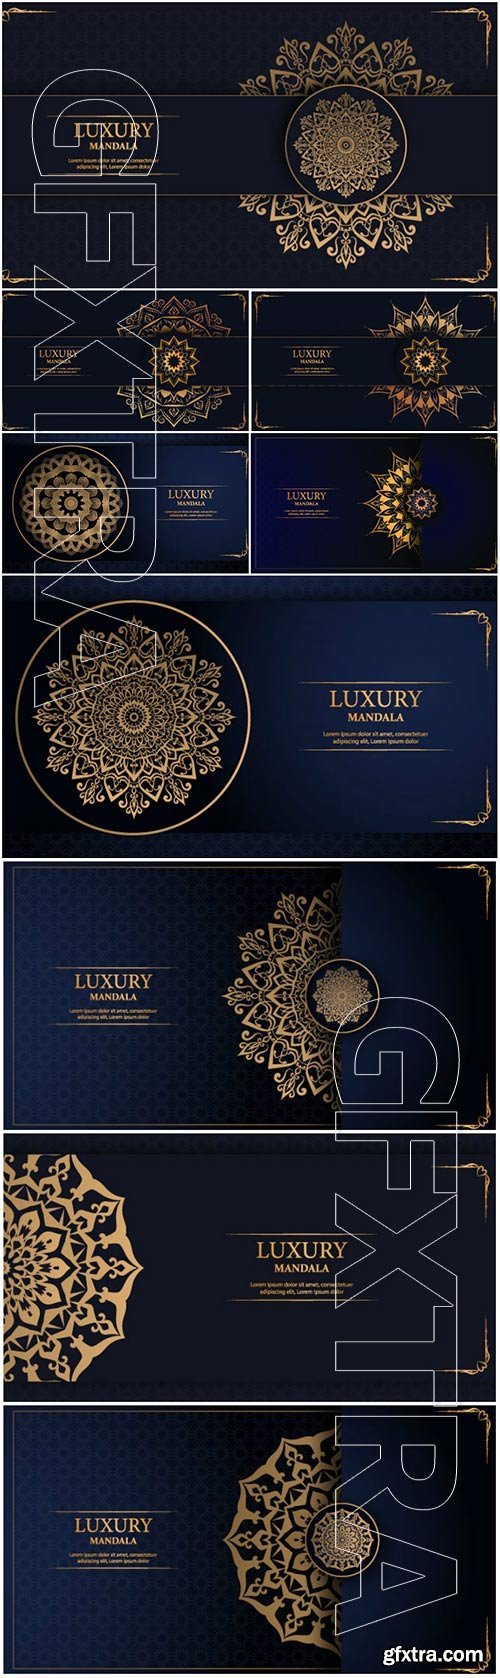 Luxury mandala arabesque ornamental vector background